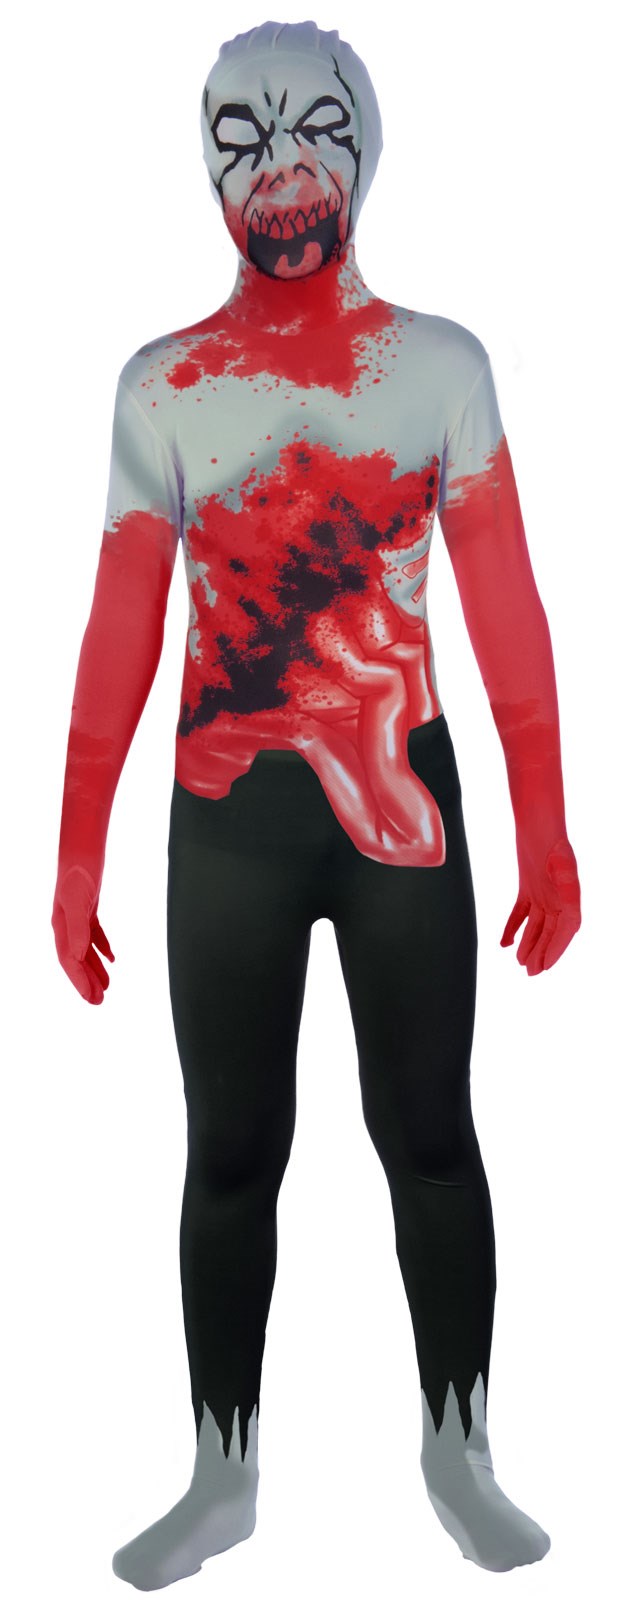 Zombie Skin Suit Child Costume